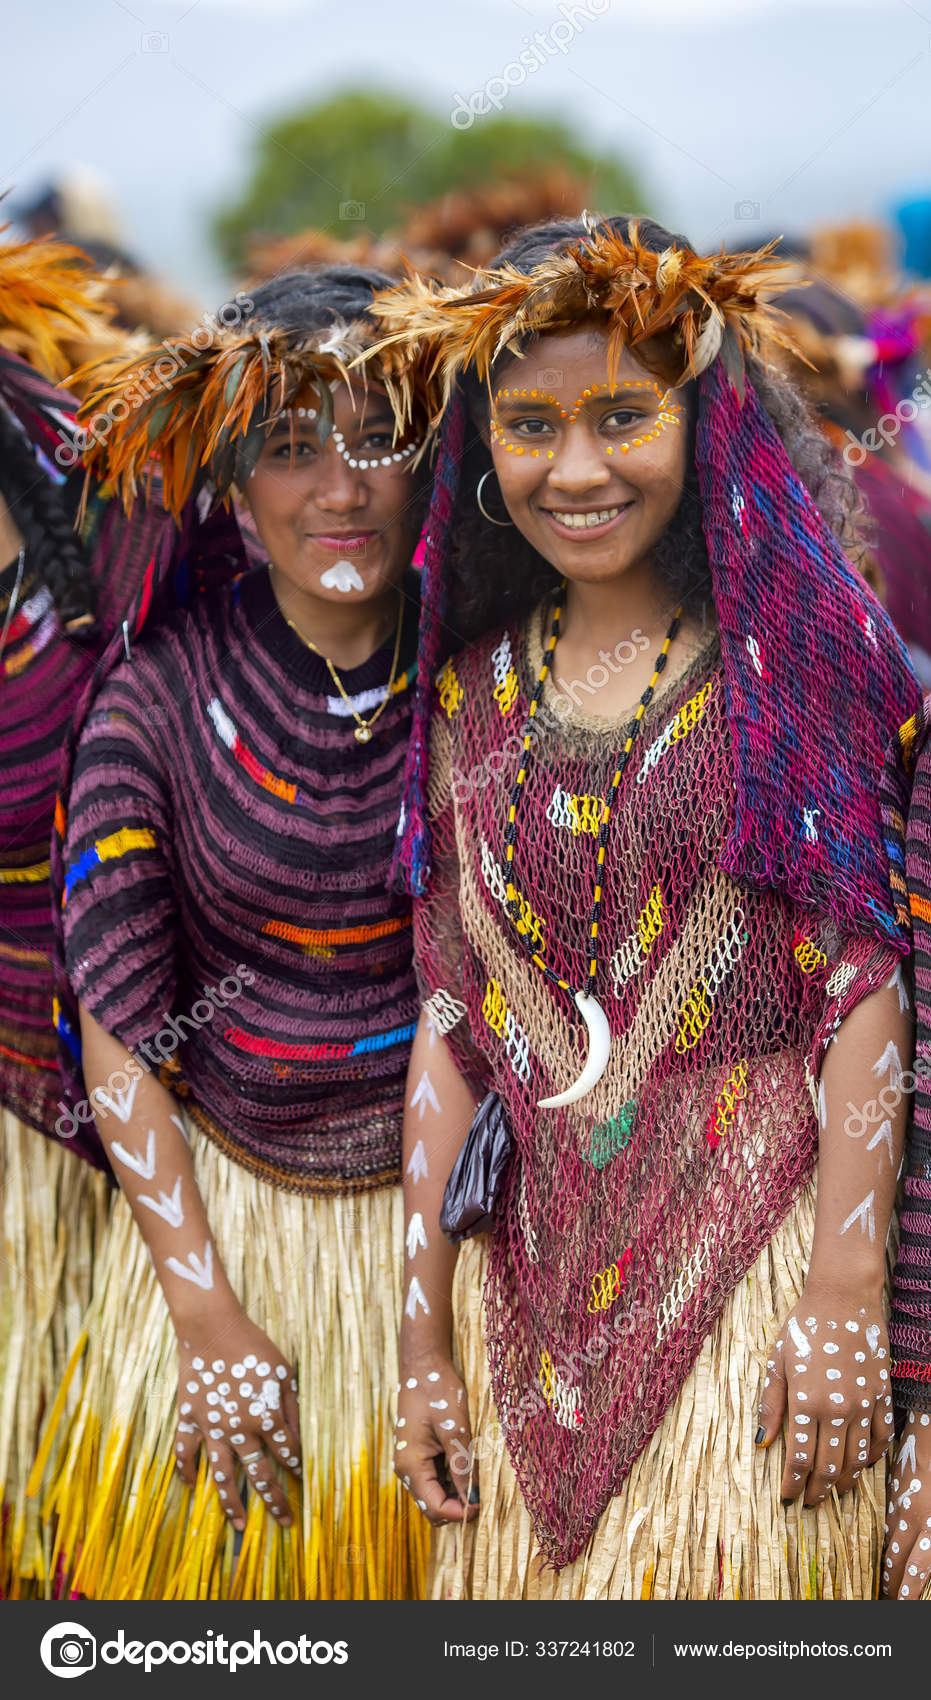 Guinea women new papua Papua New